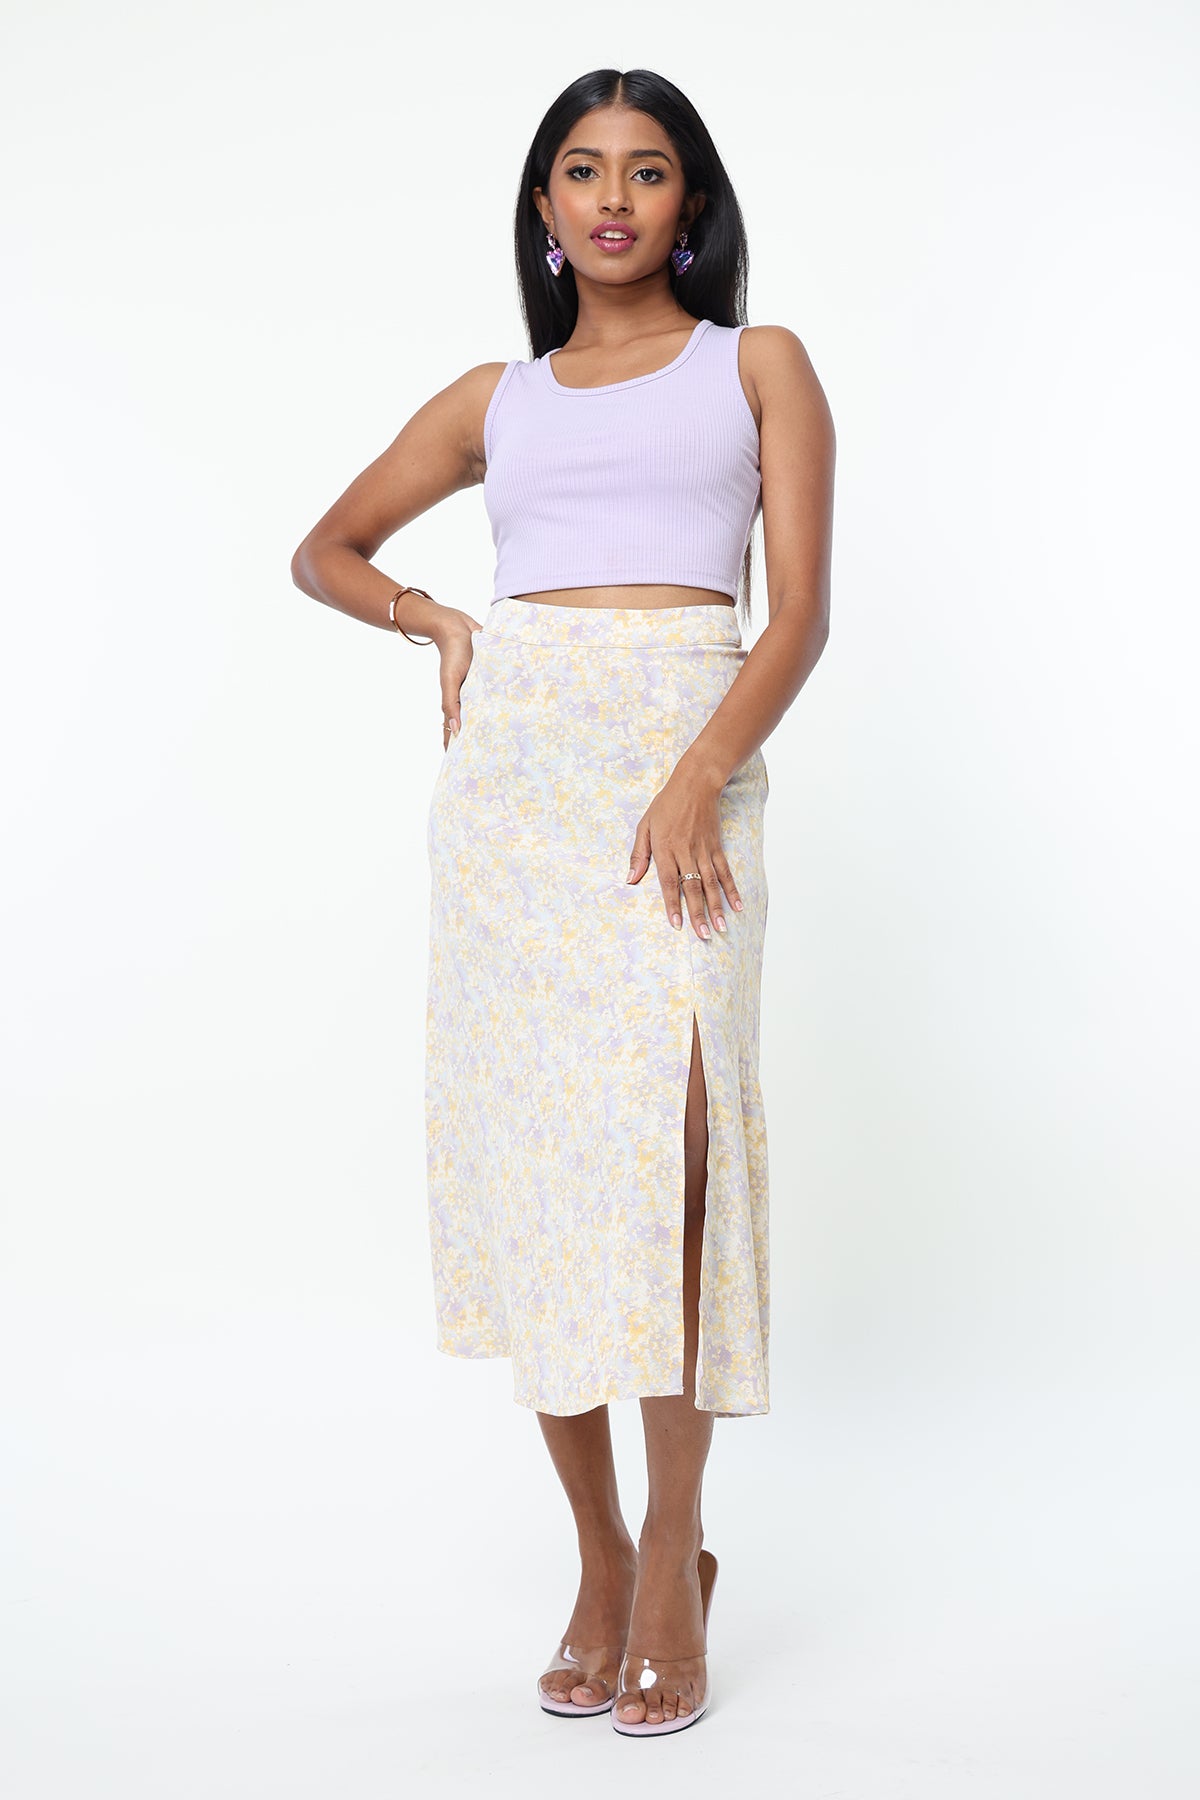 Modano Women's Normal Print Casual Skirt